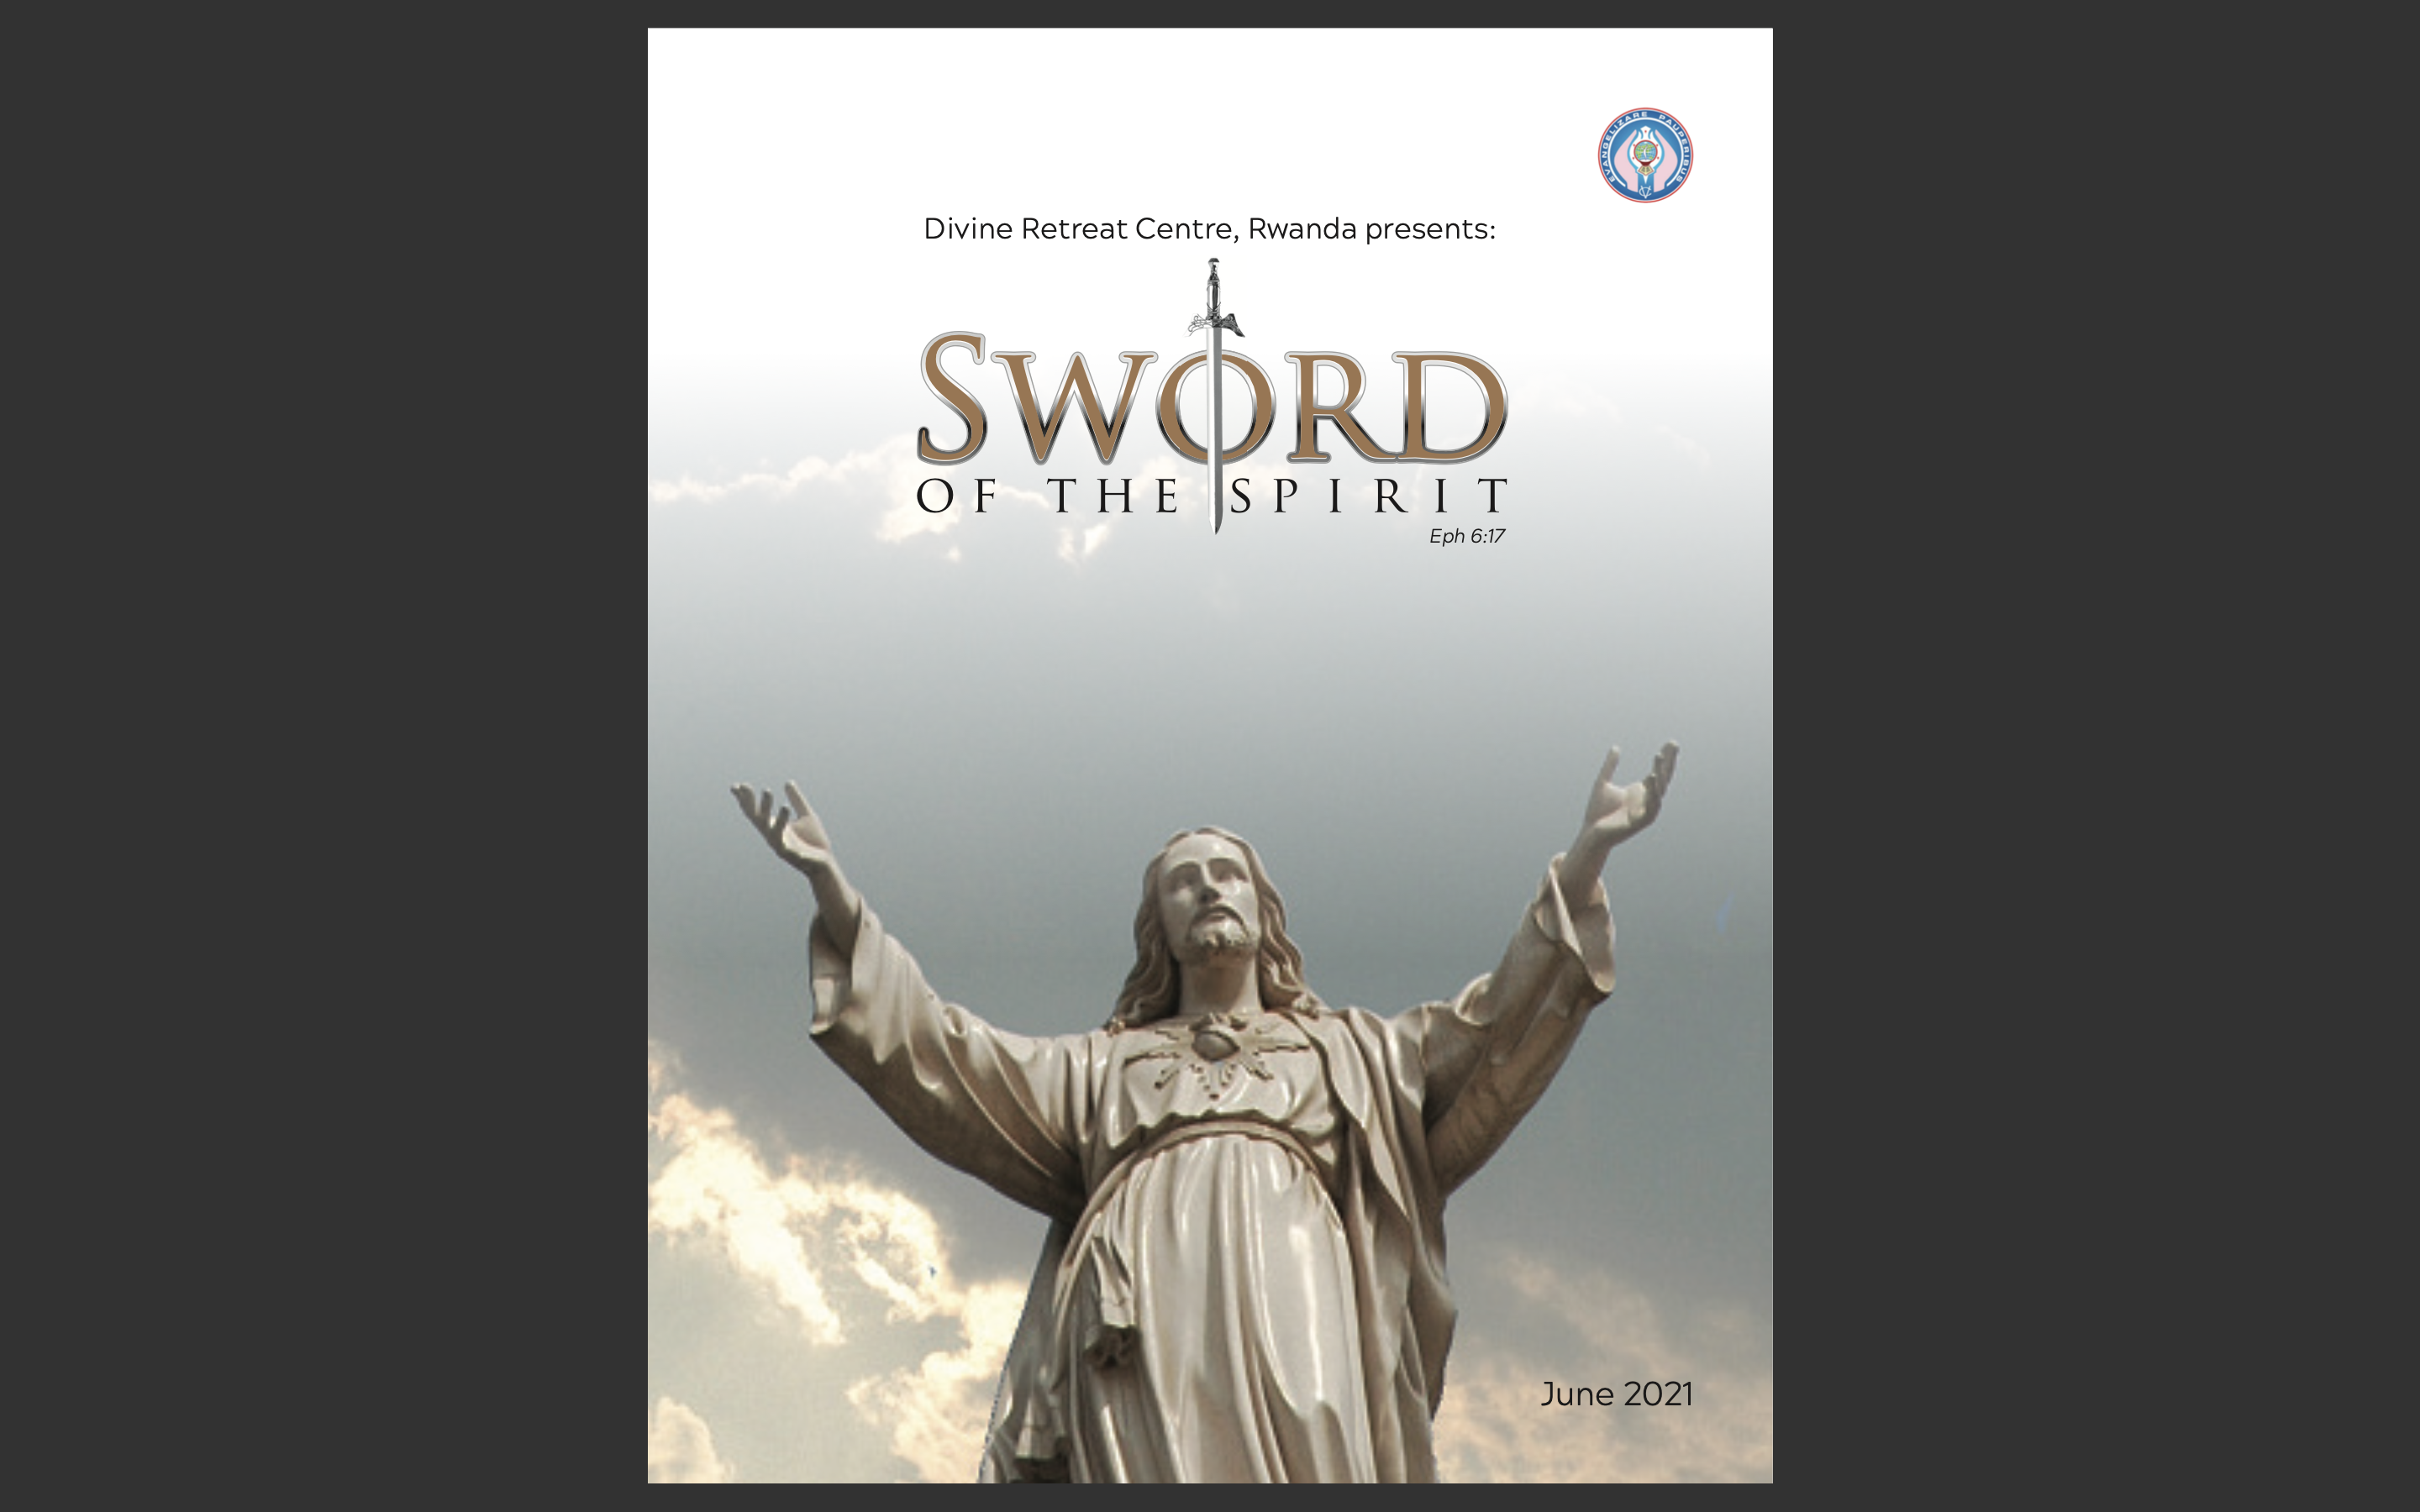 The sword of the spirit - June